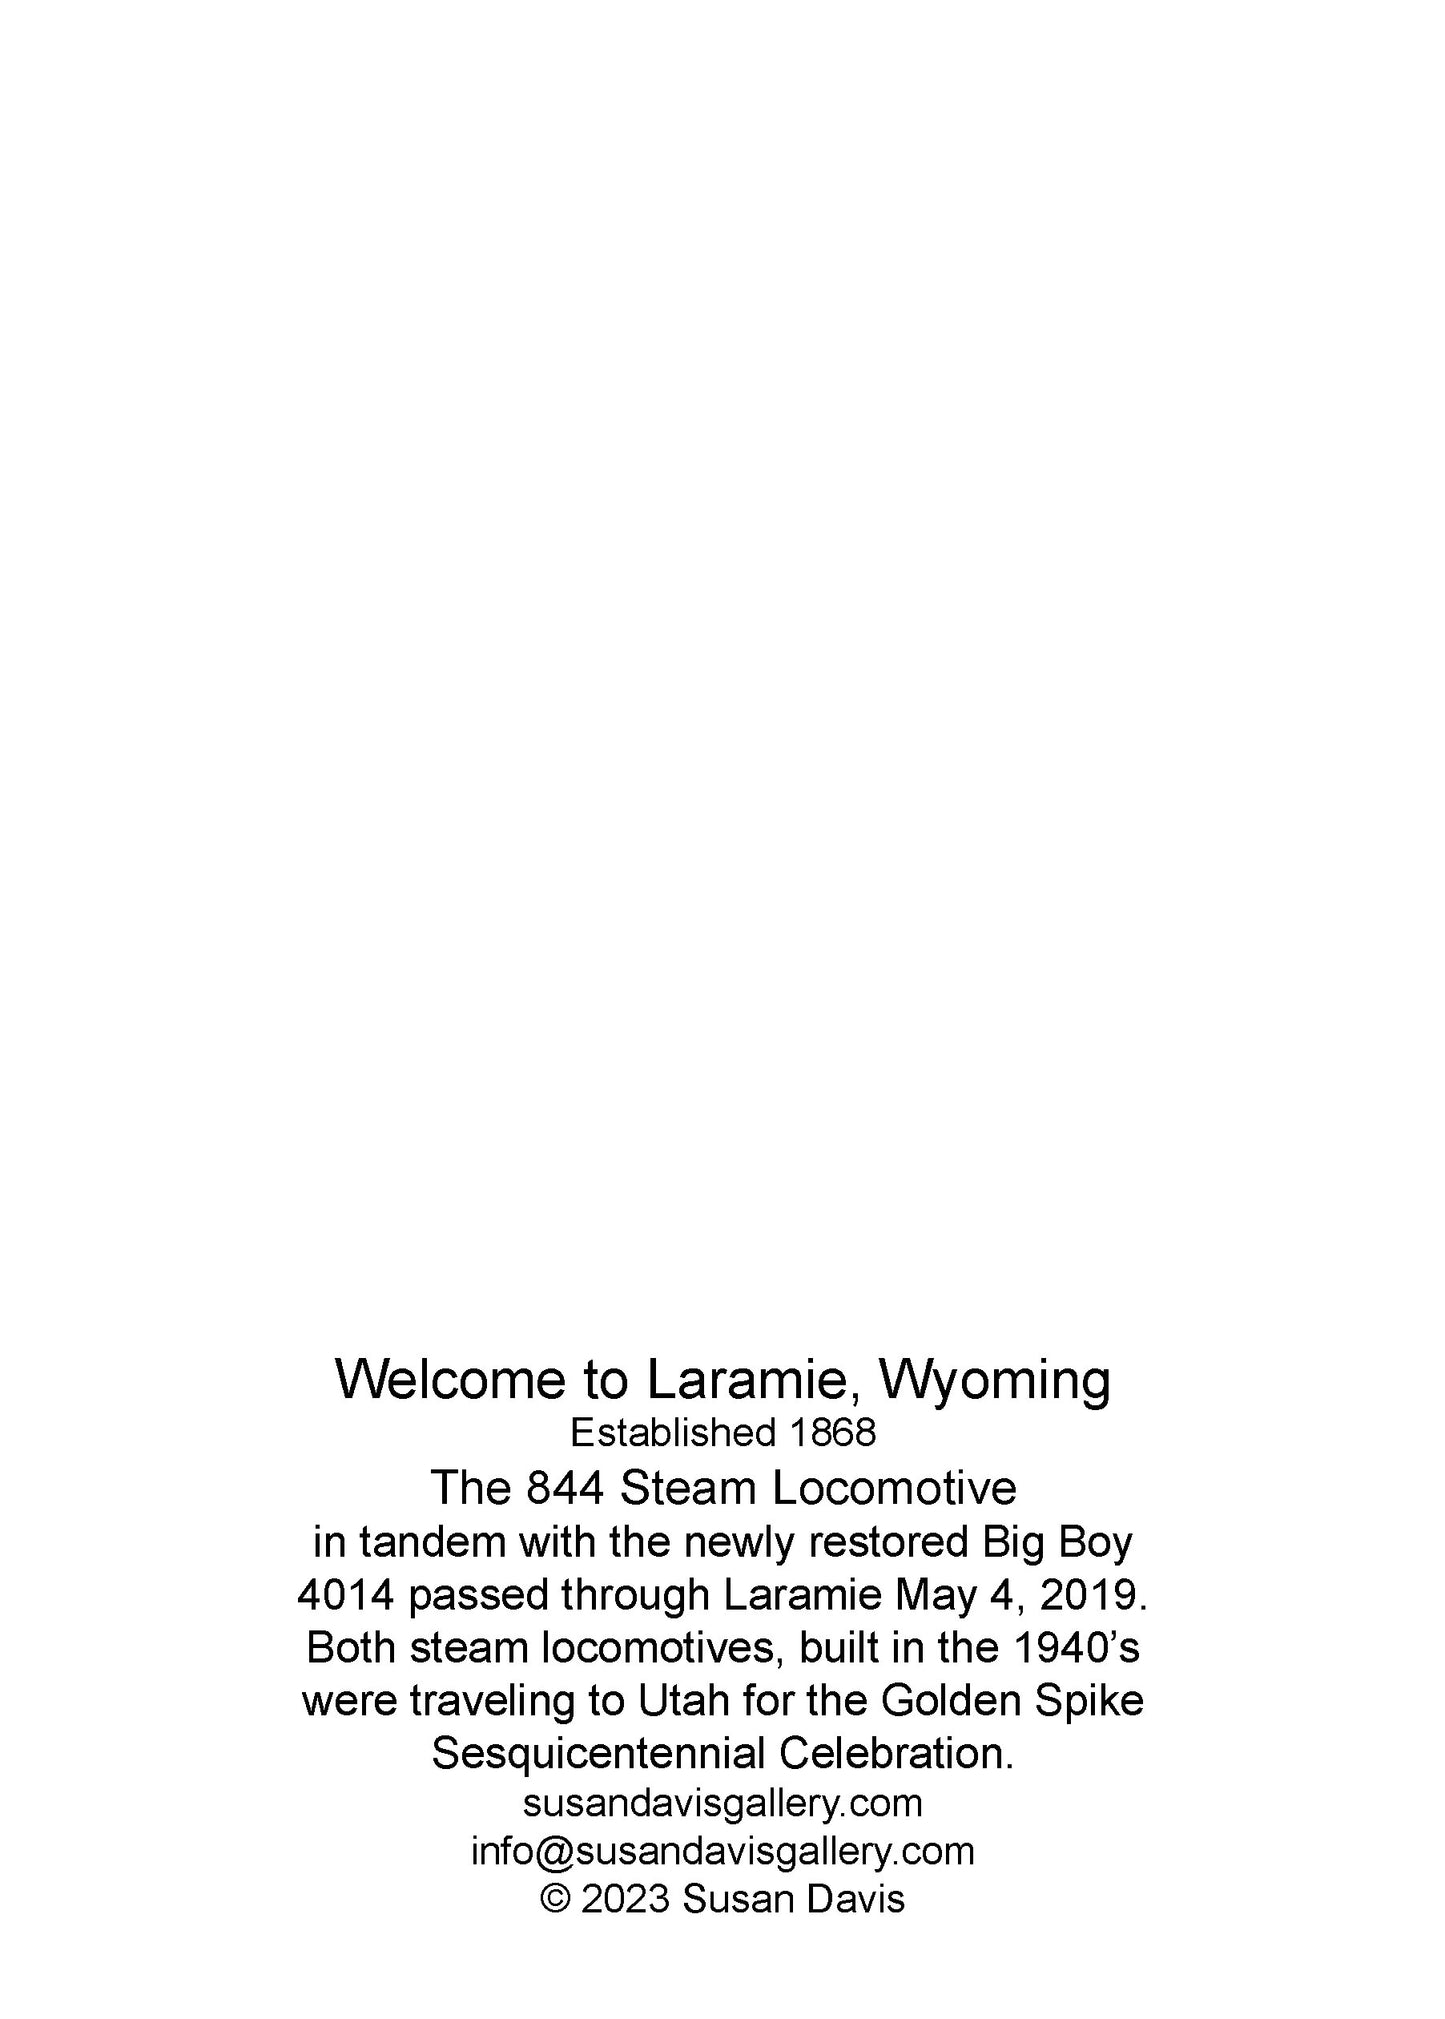 " Welcome to Laramie Wyoming "  844 Steam Locomotive Greeting Card